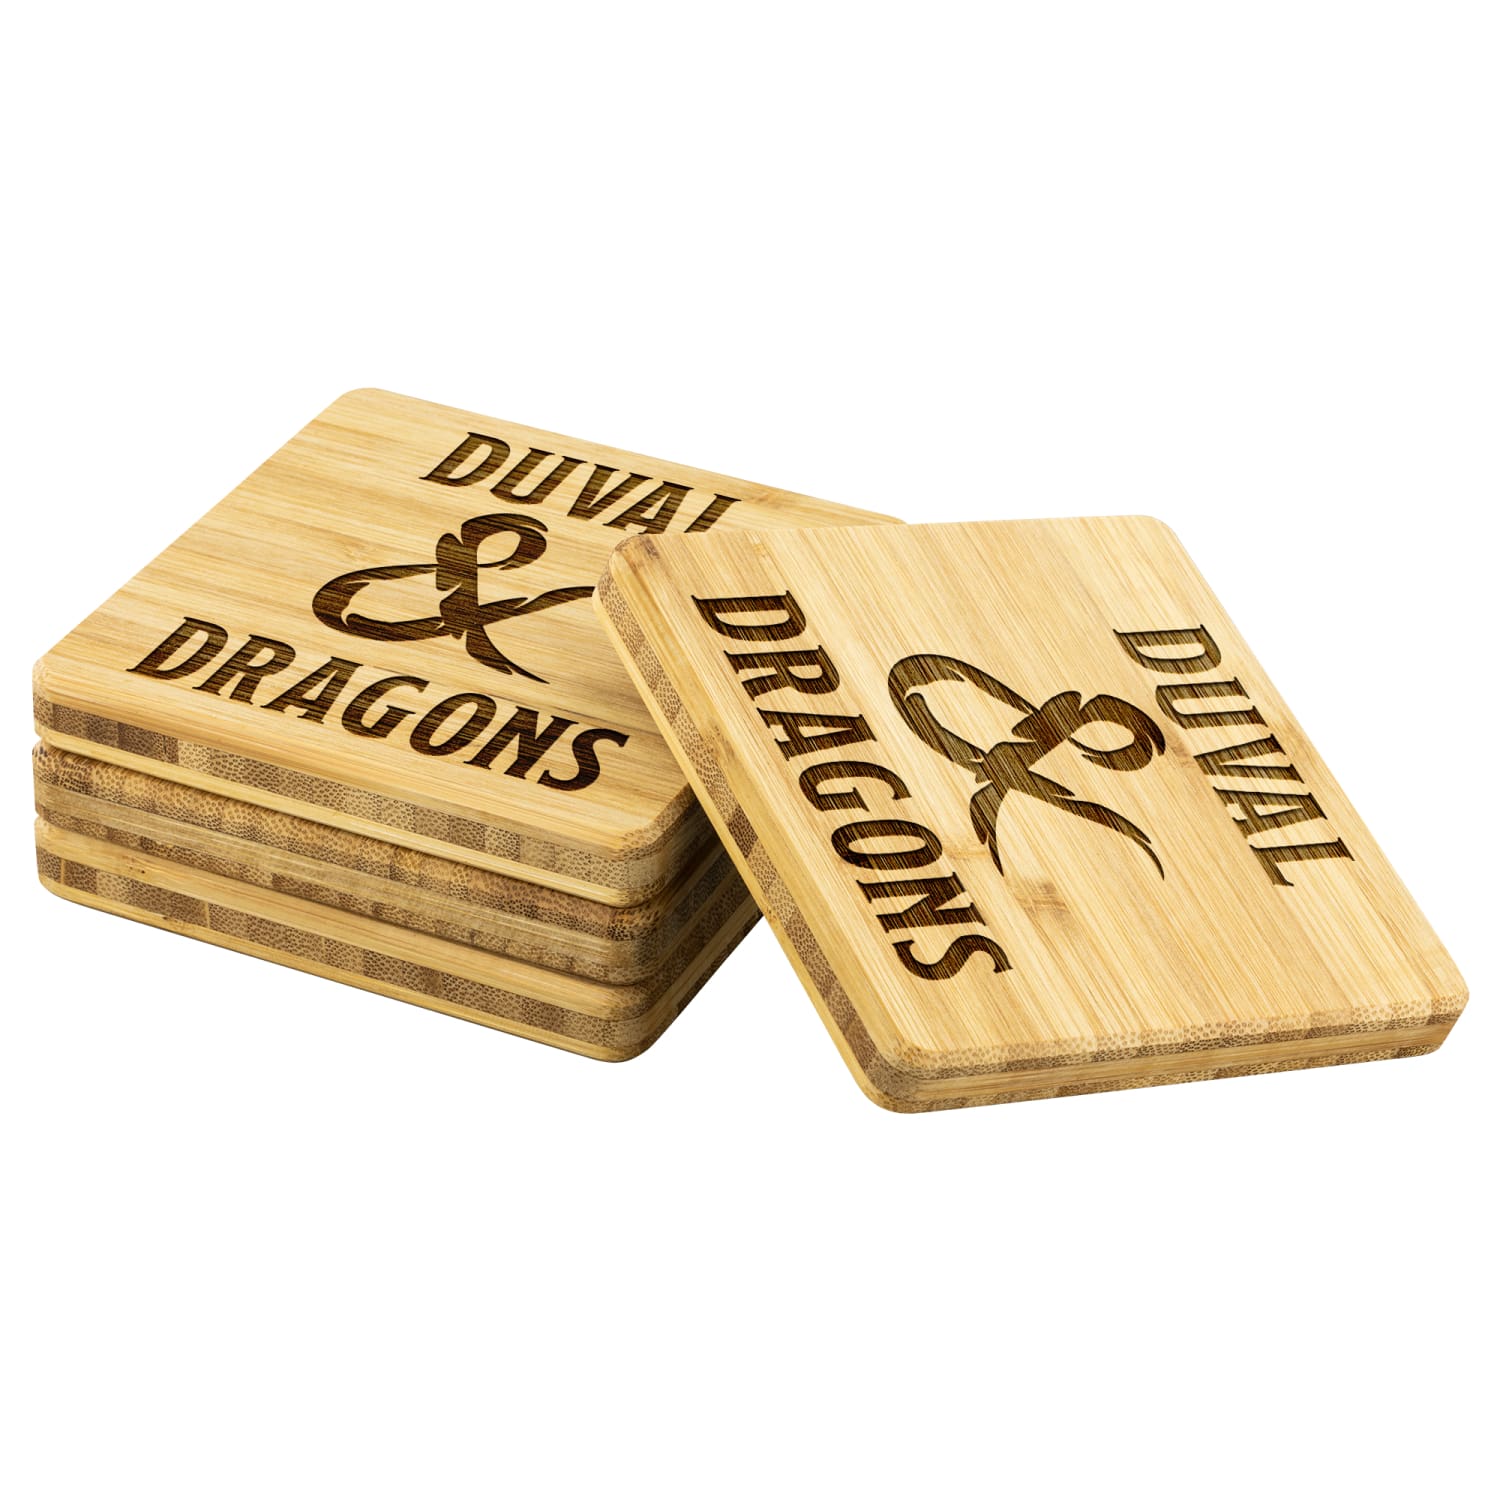 Duval & Dragons Logo Bamboo Coaster Set of 4 - Bamboo Coaster - 4pc - Coasters